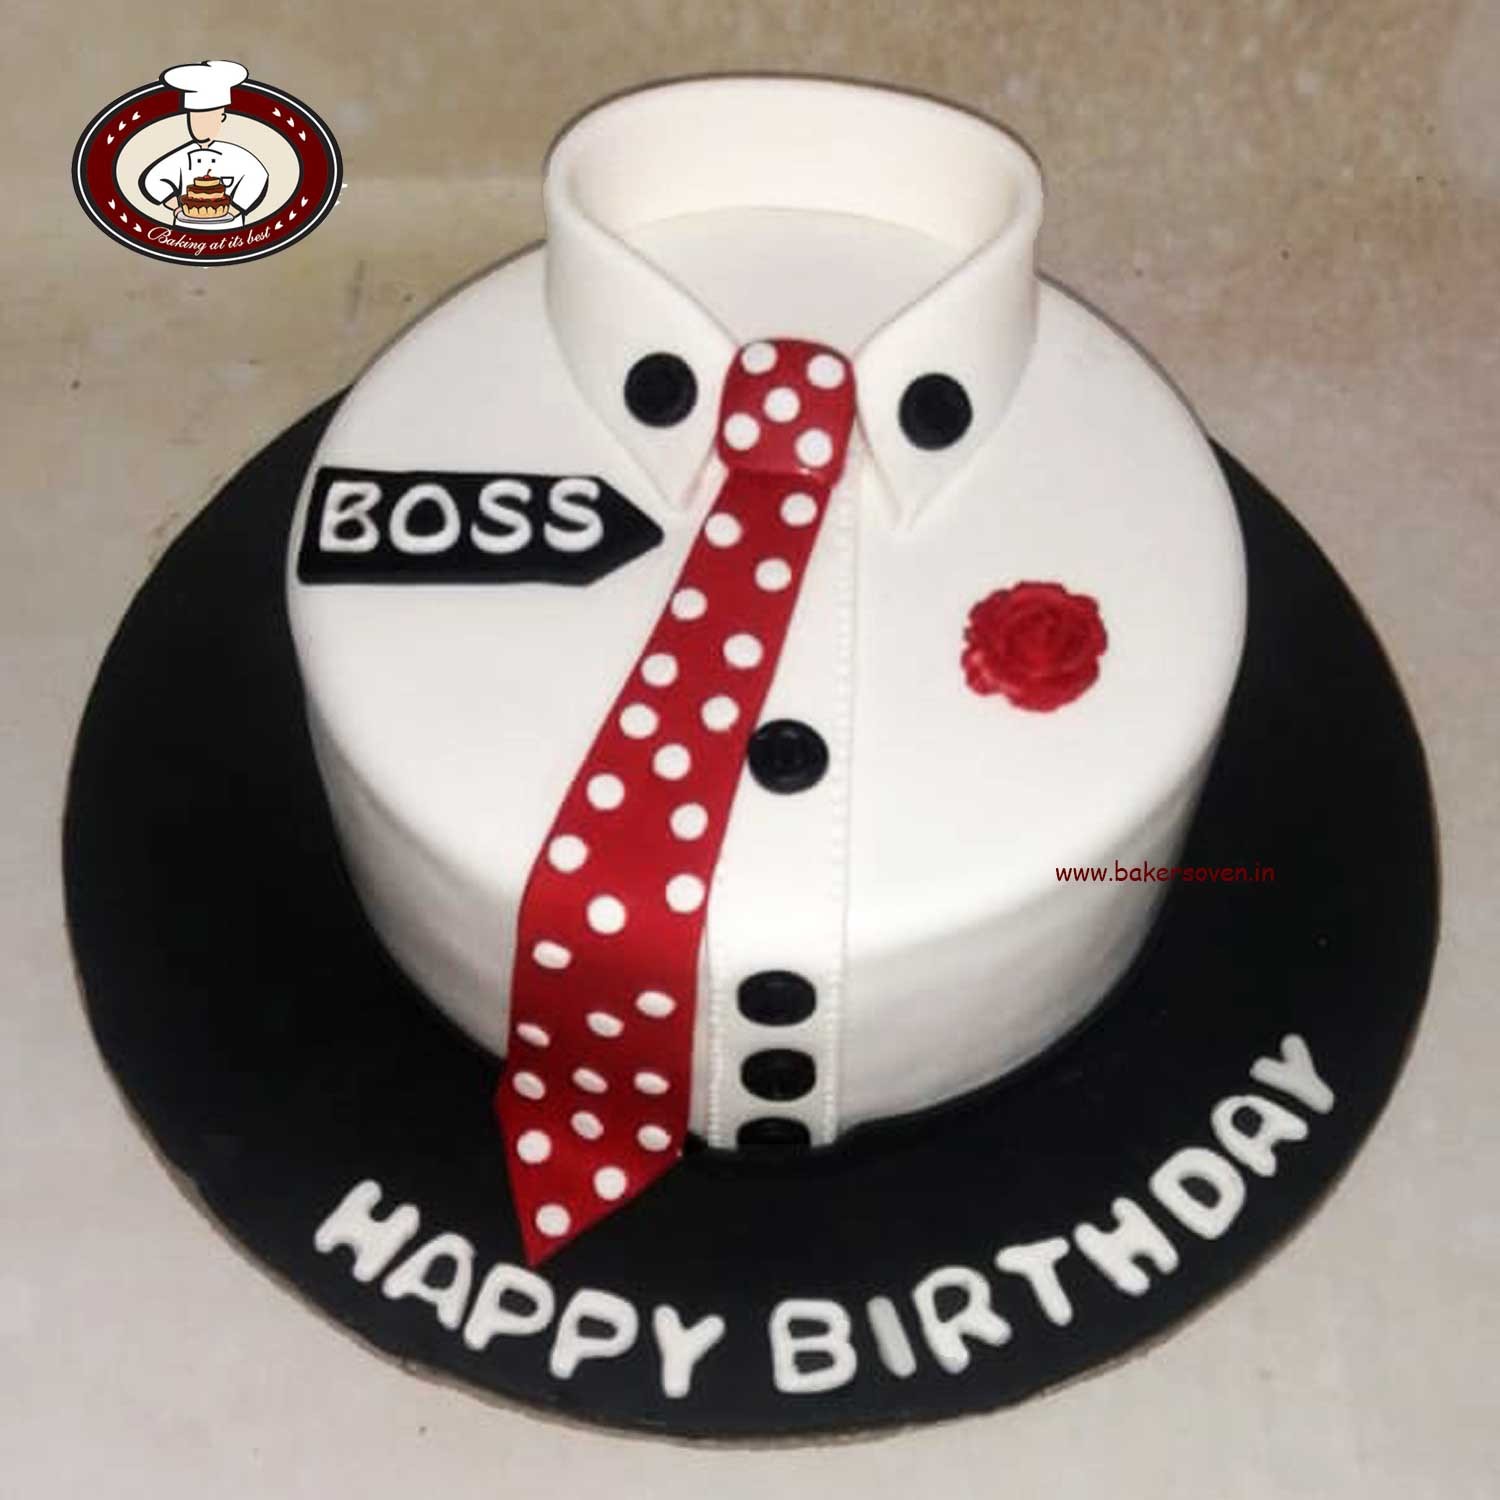 The Boss is Back Cake – legateaucakes